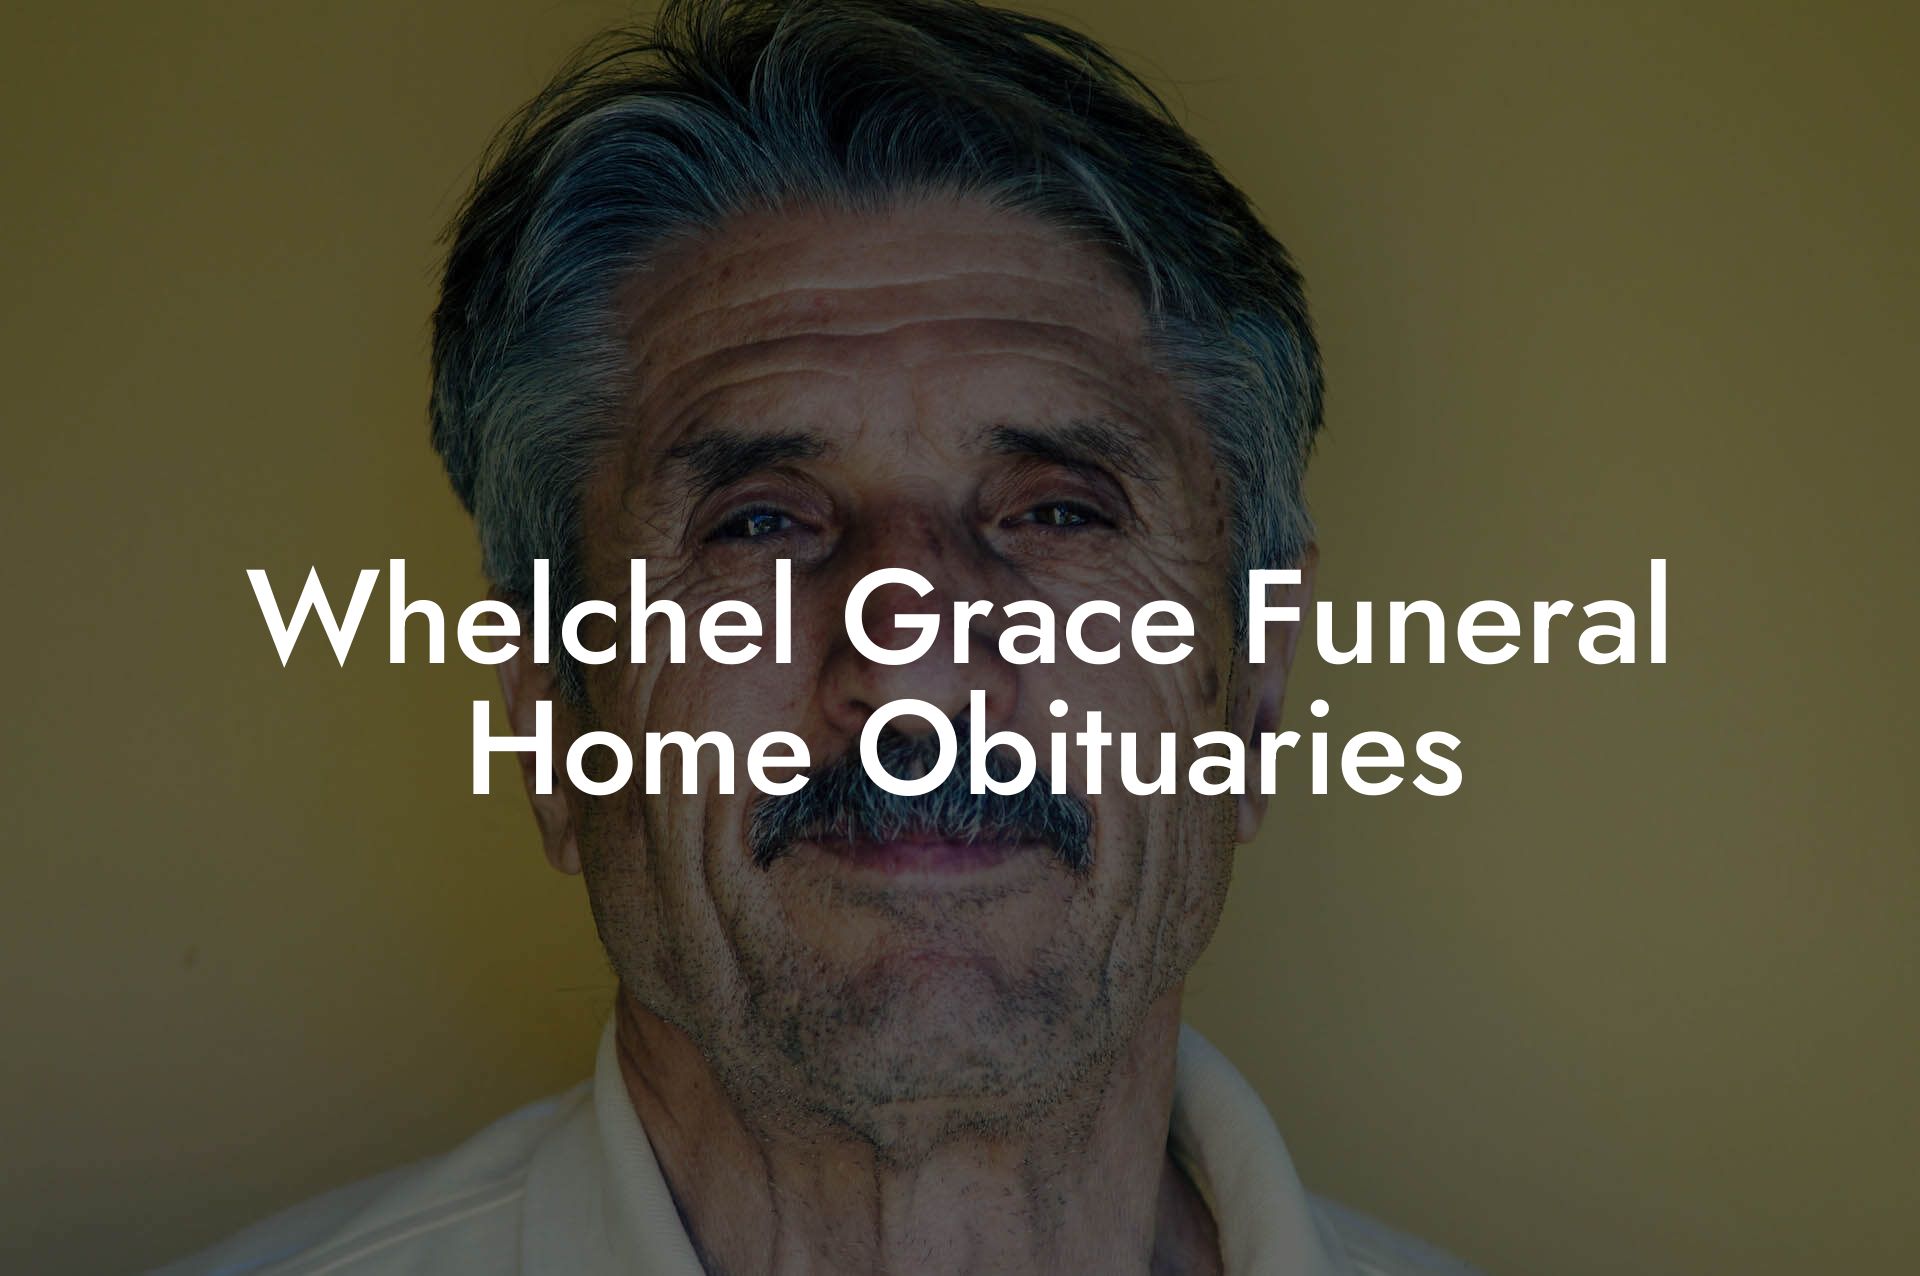 Whelchel Grace Funeral Home Obituaries